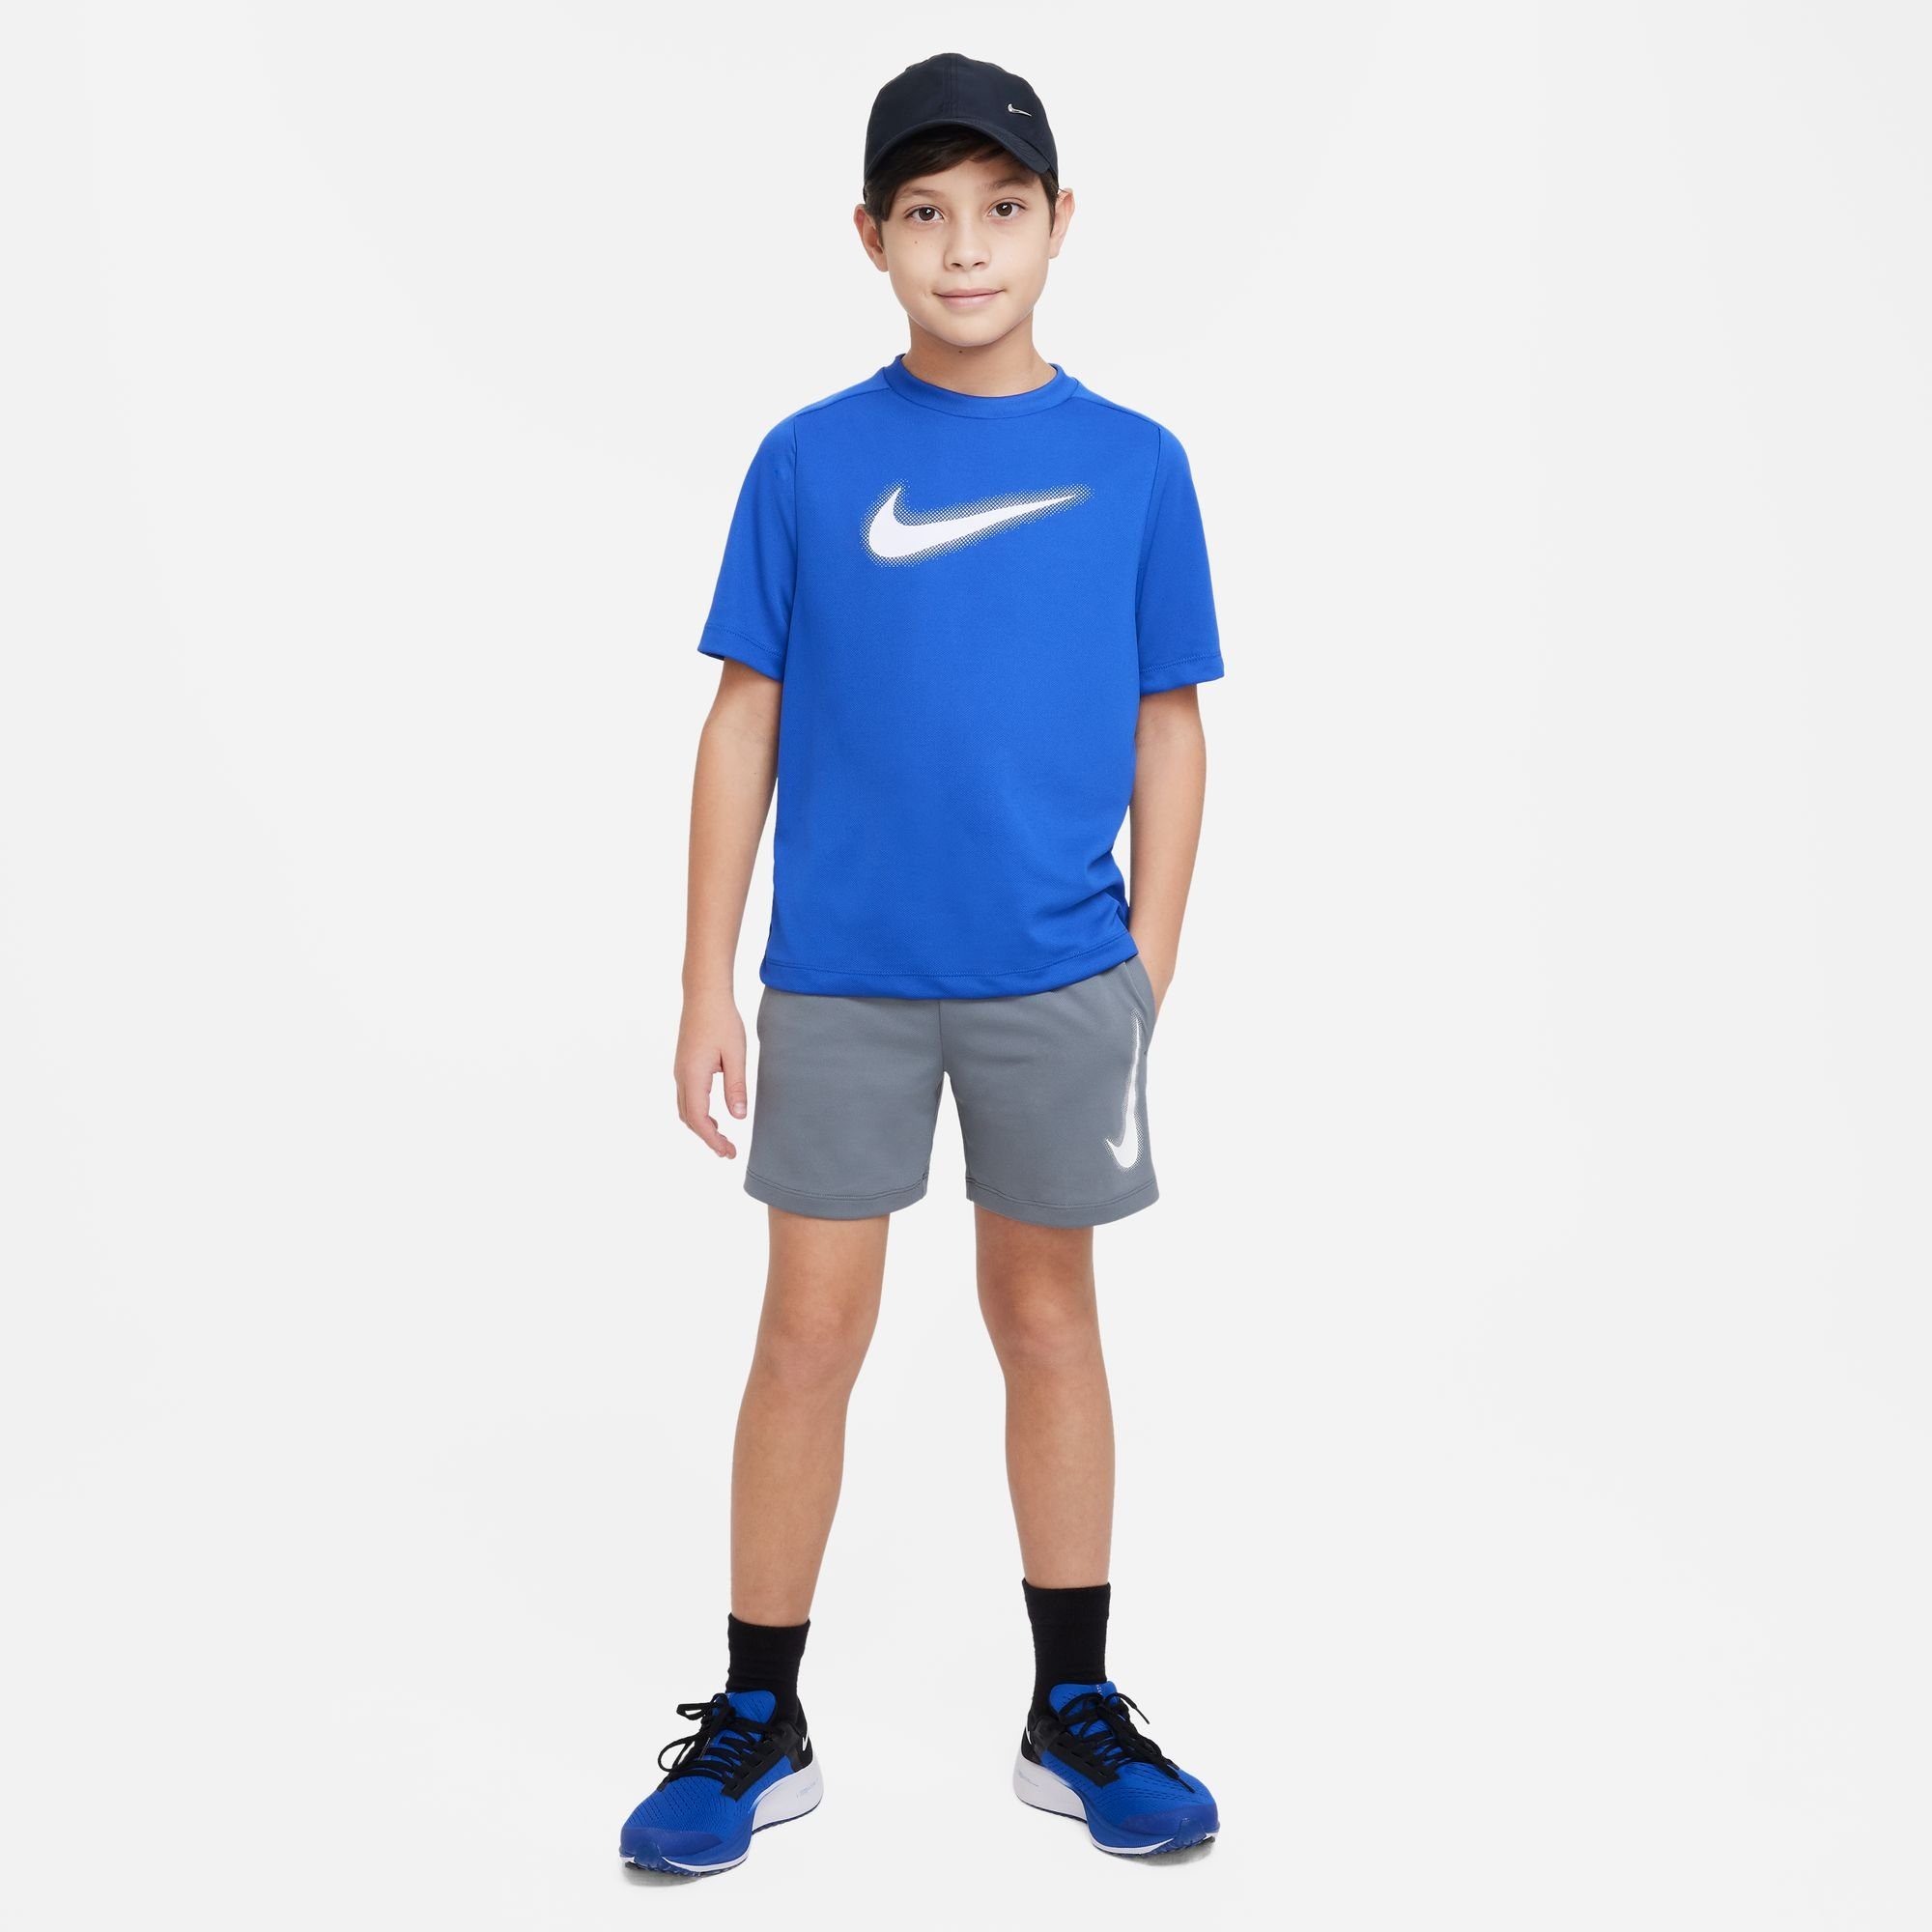 DRI-FIT GRAPHIC Nike KIDS' (BOYS) TRAINING TOP GAME MULTI+ Trainingsshirt ROYAL/WHITE BIG